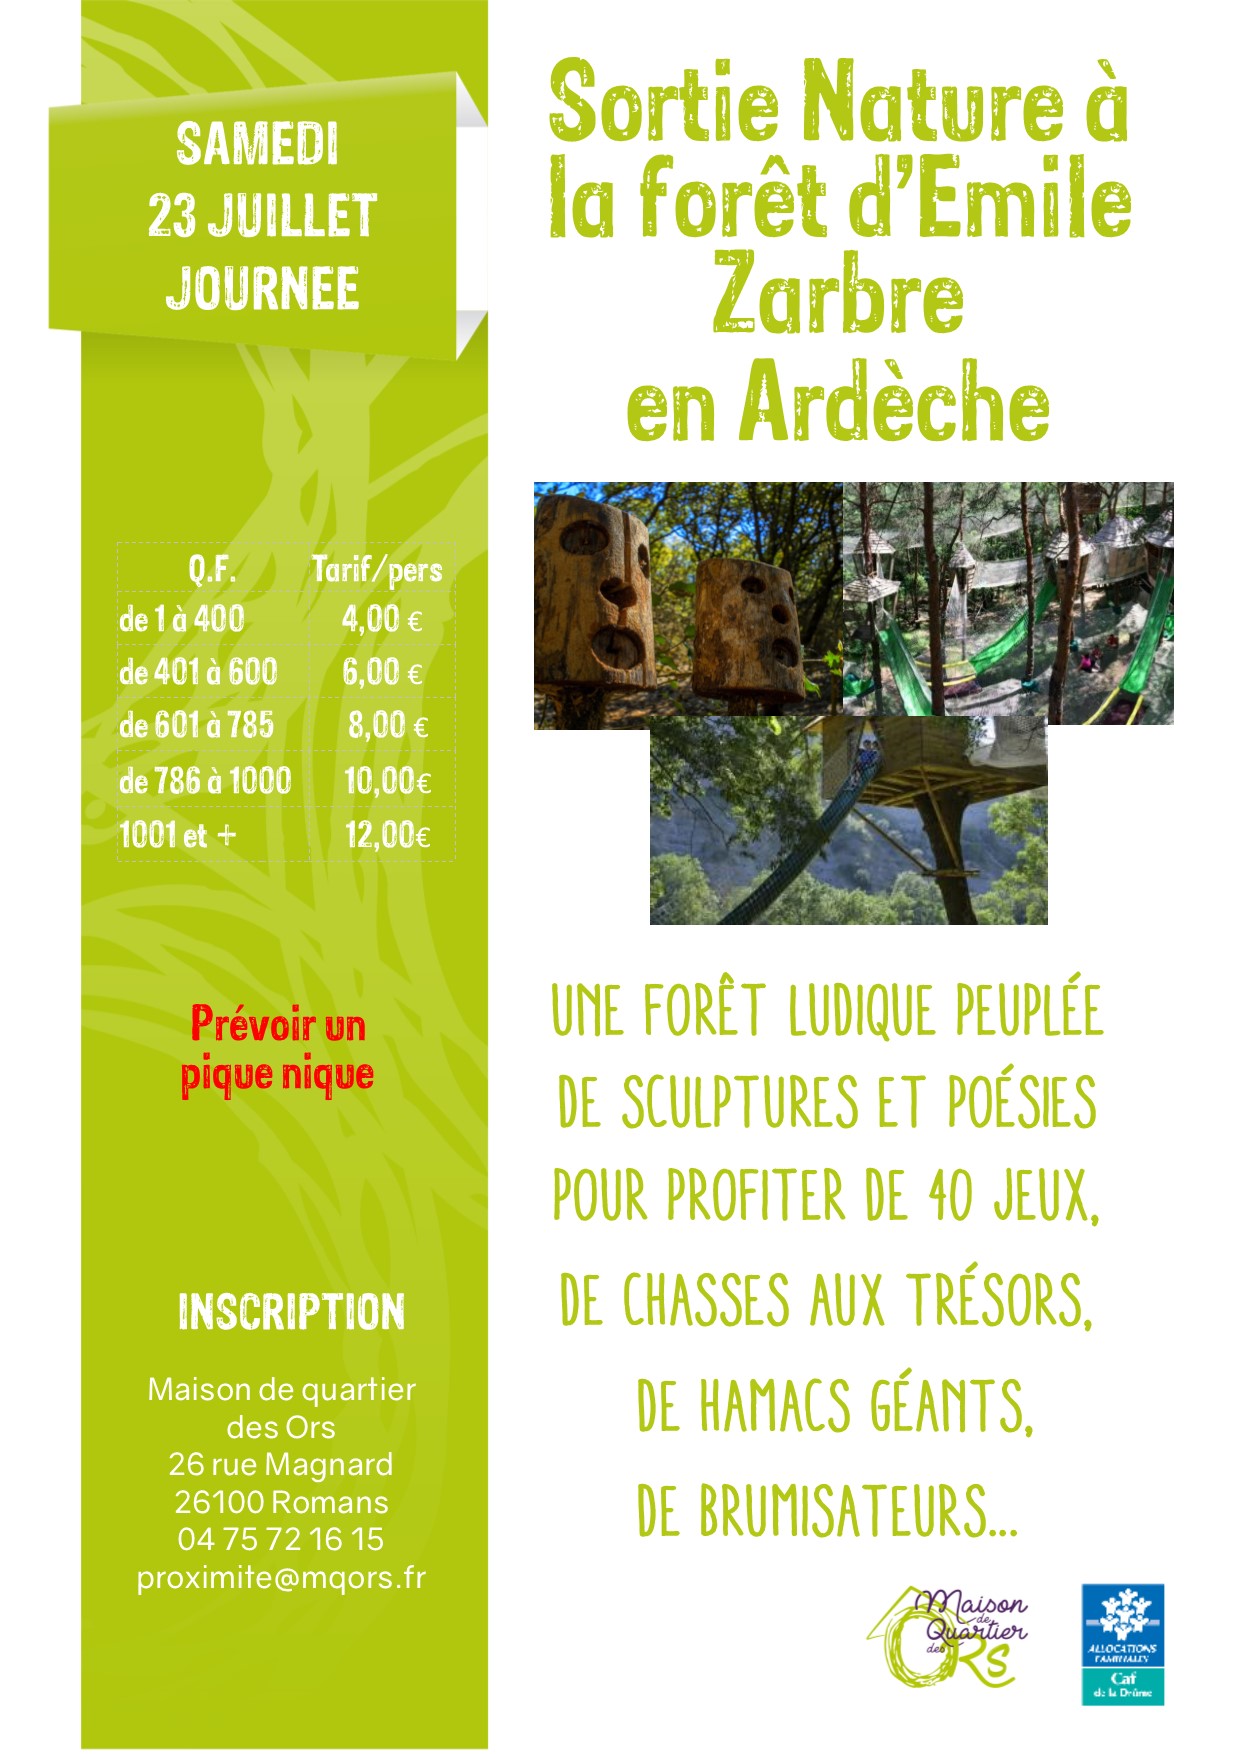 220723 Sortie nature en Ardèche JPEG 